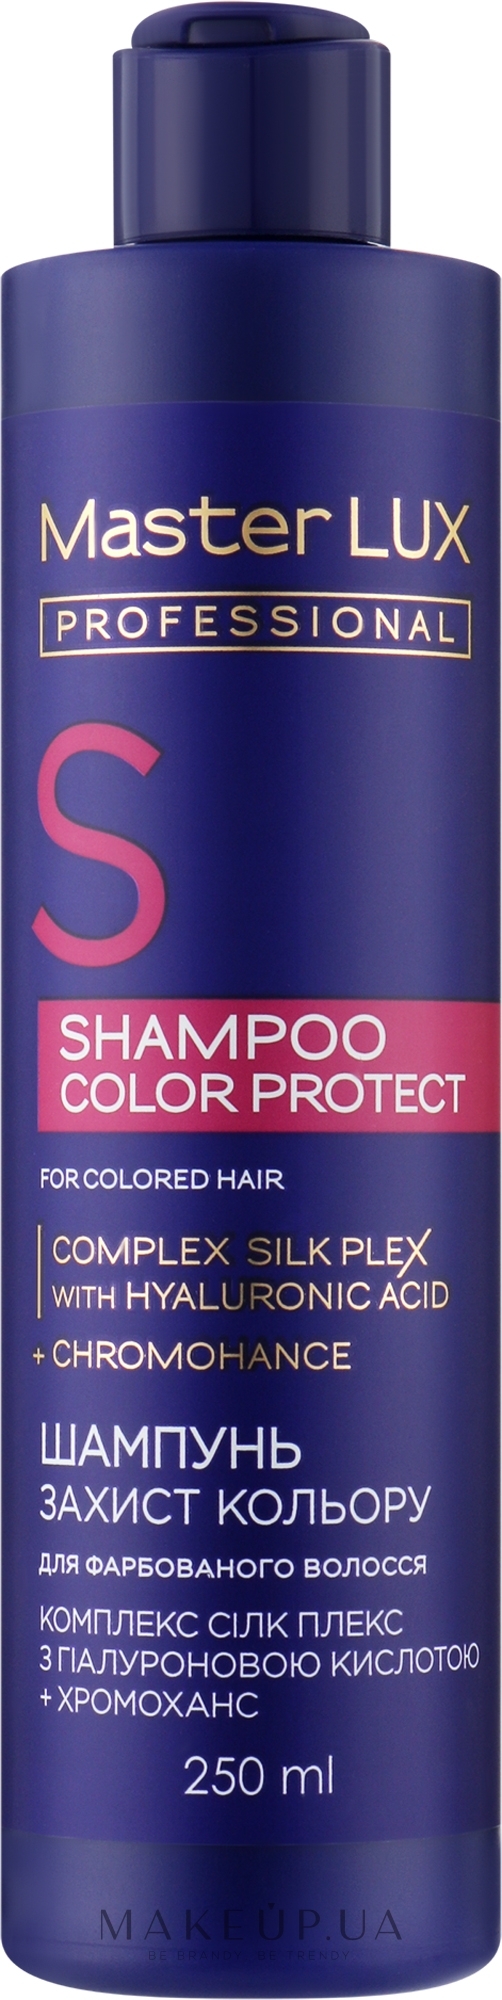 Шампунь для фарбованого волосся "Захист кольору" - Master LUX Professional Color Protect Shampoo — фото 250ml